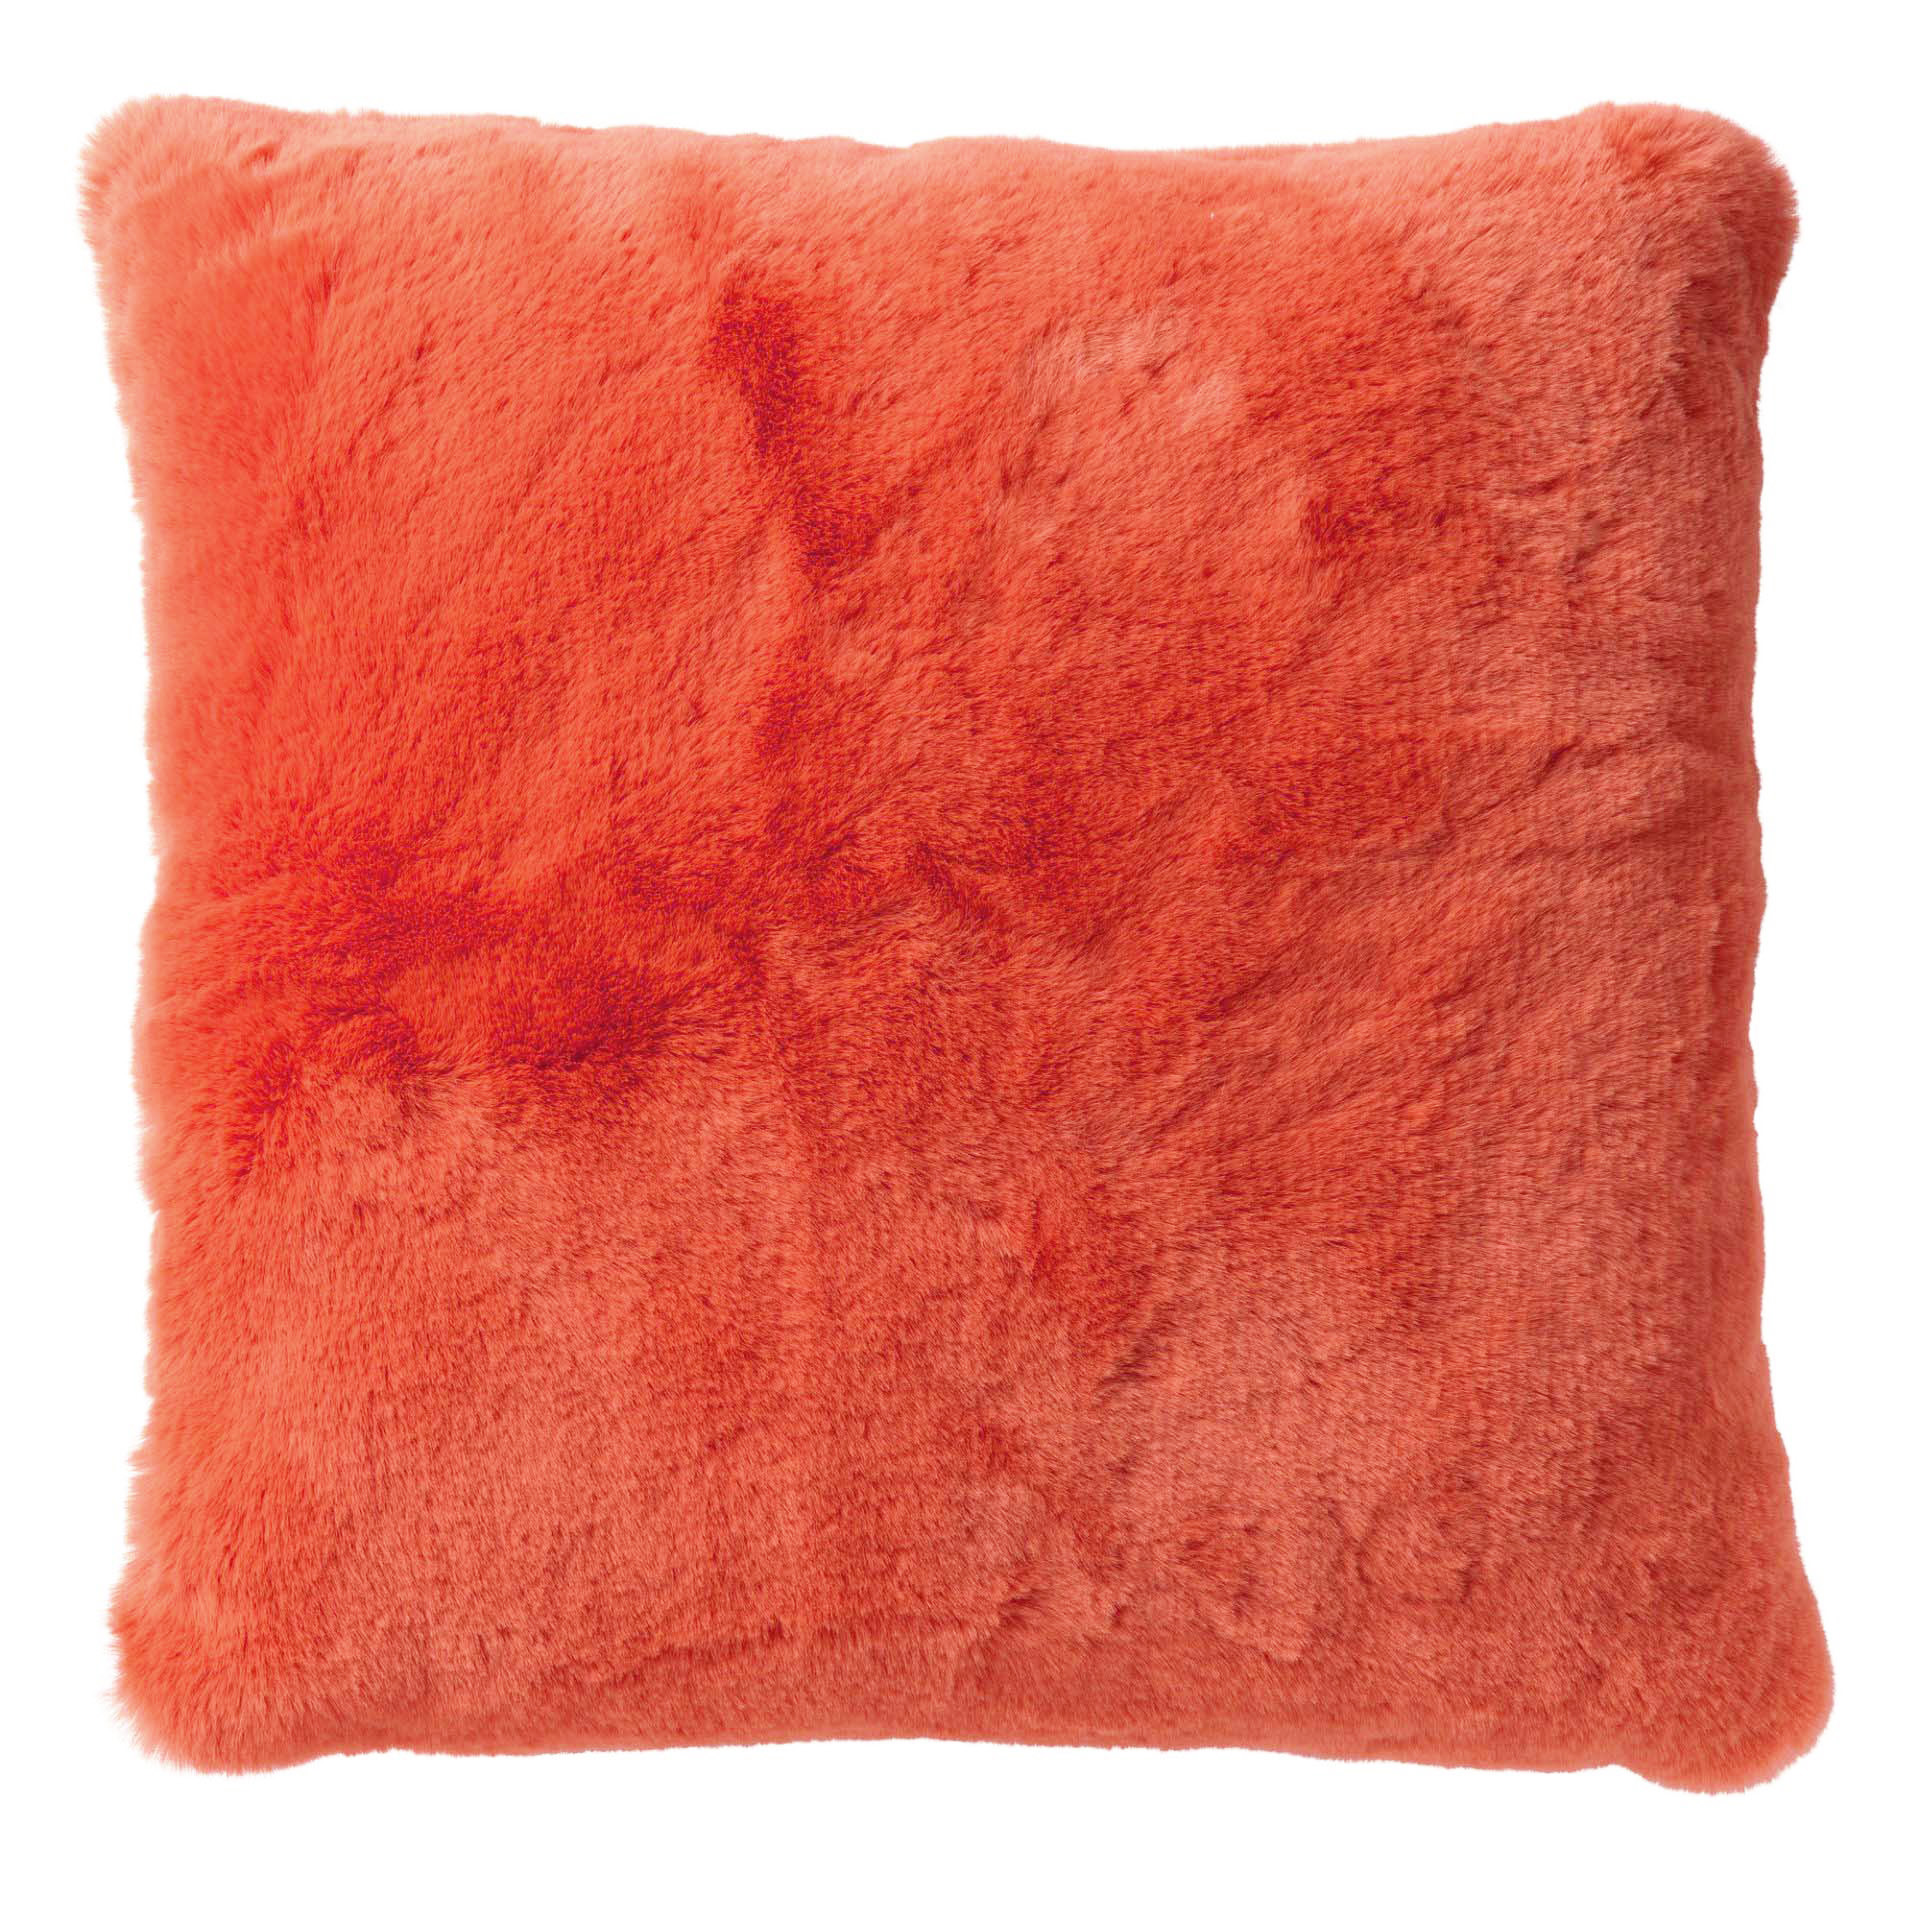 ZAYA - Sierkussen unikleur 45x45 cm - Coral - koraalroze - oranje - superzacht